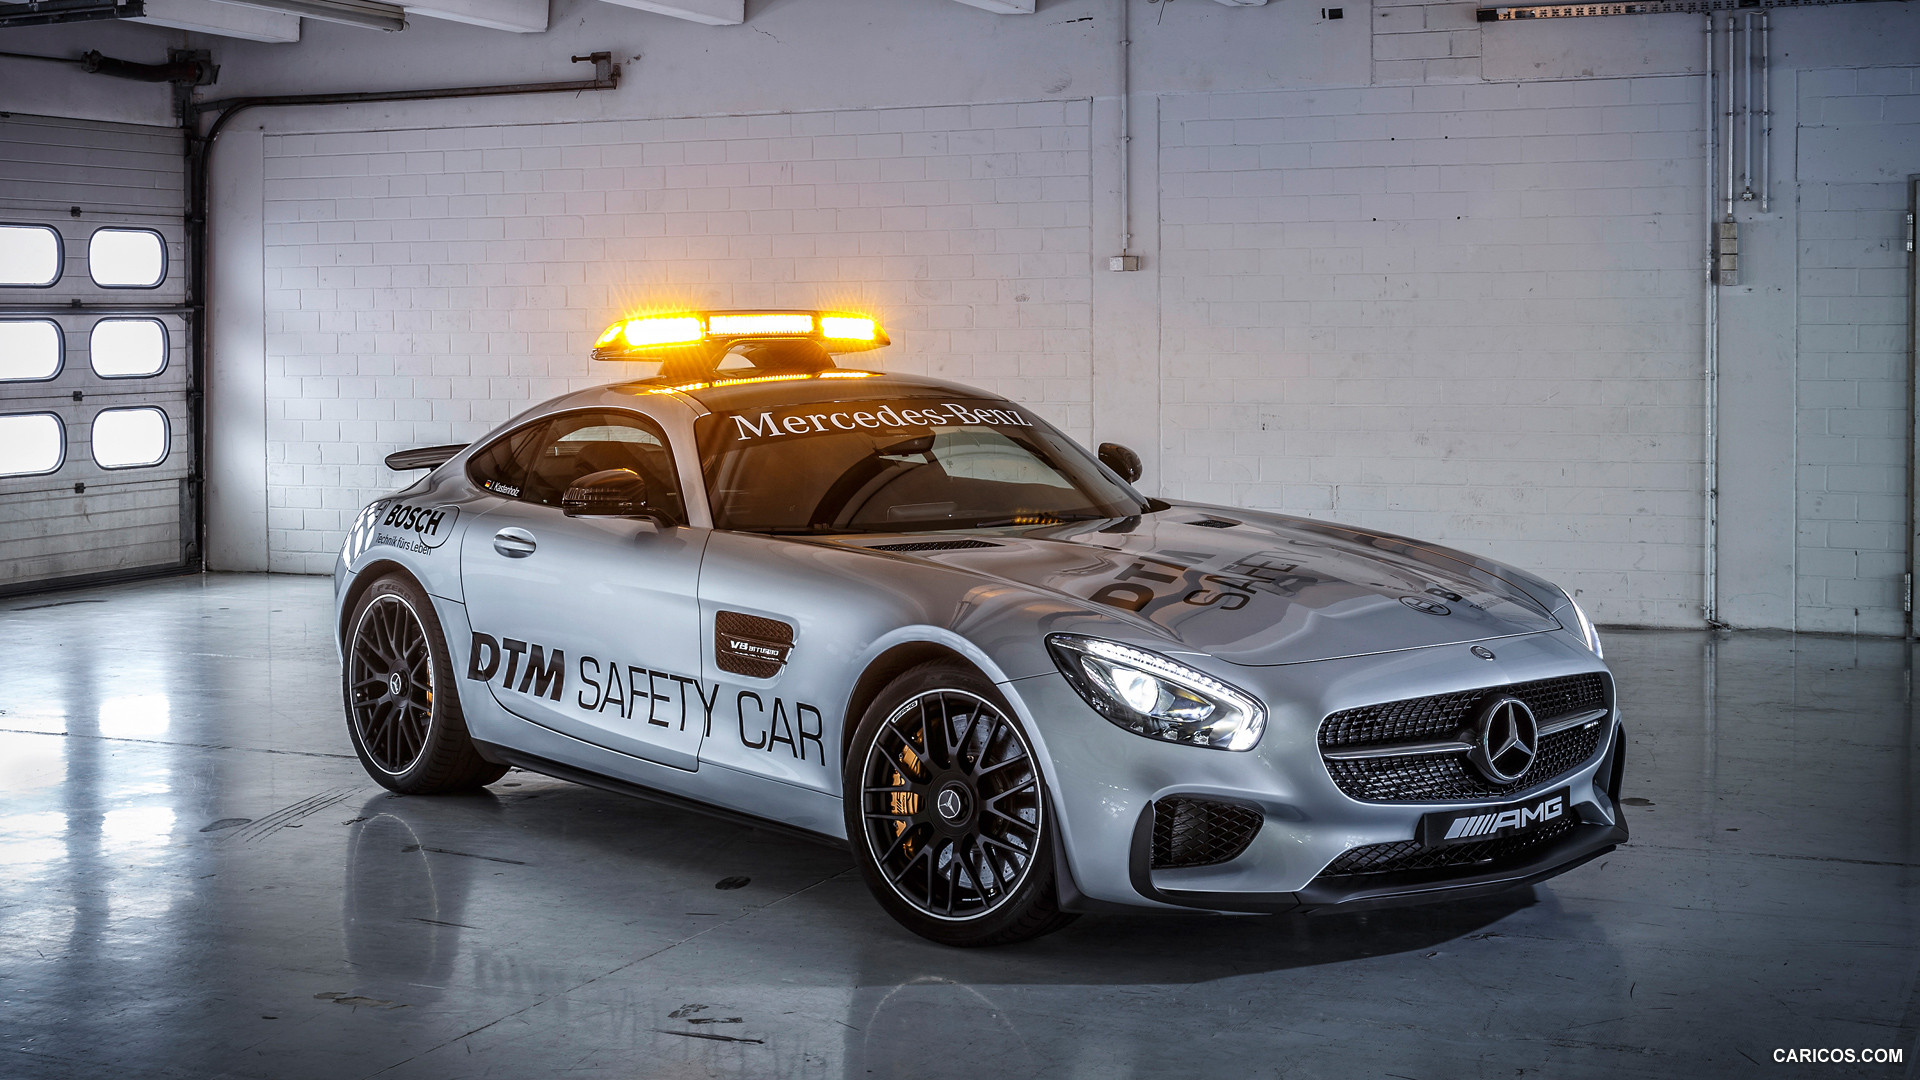 2015 Mercedes-AMG GT S DTM Safety Car  - Front, #10 of 16